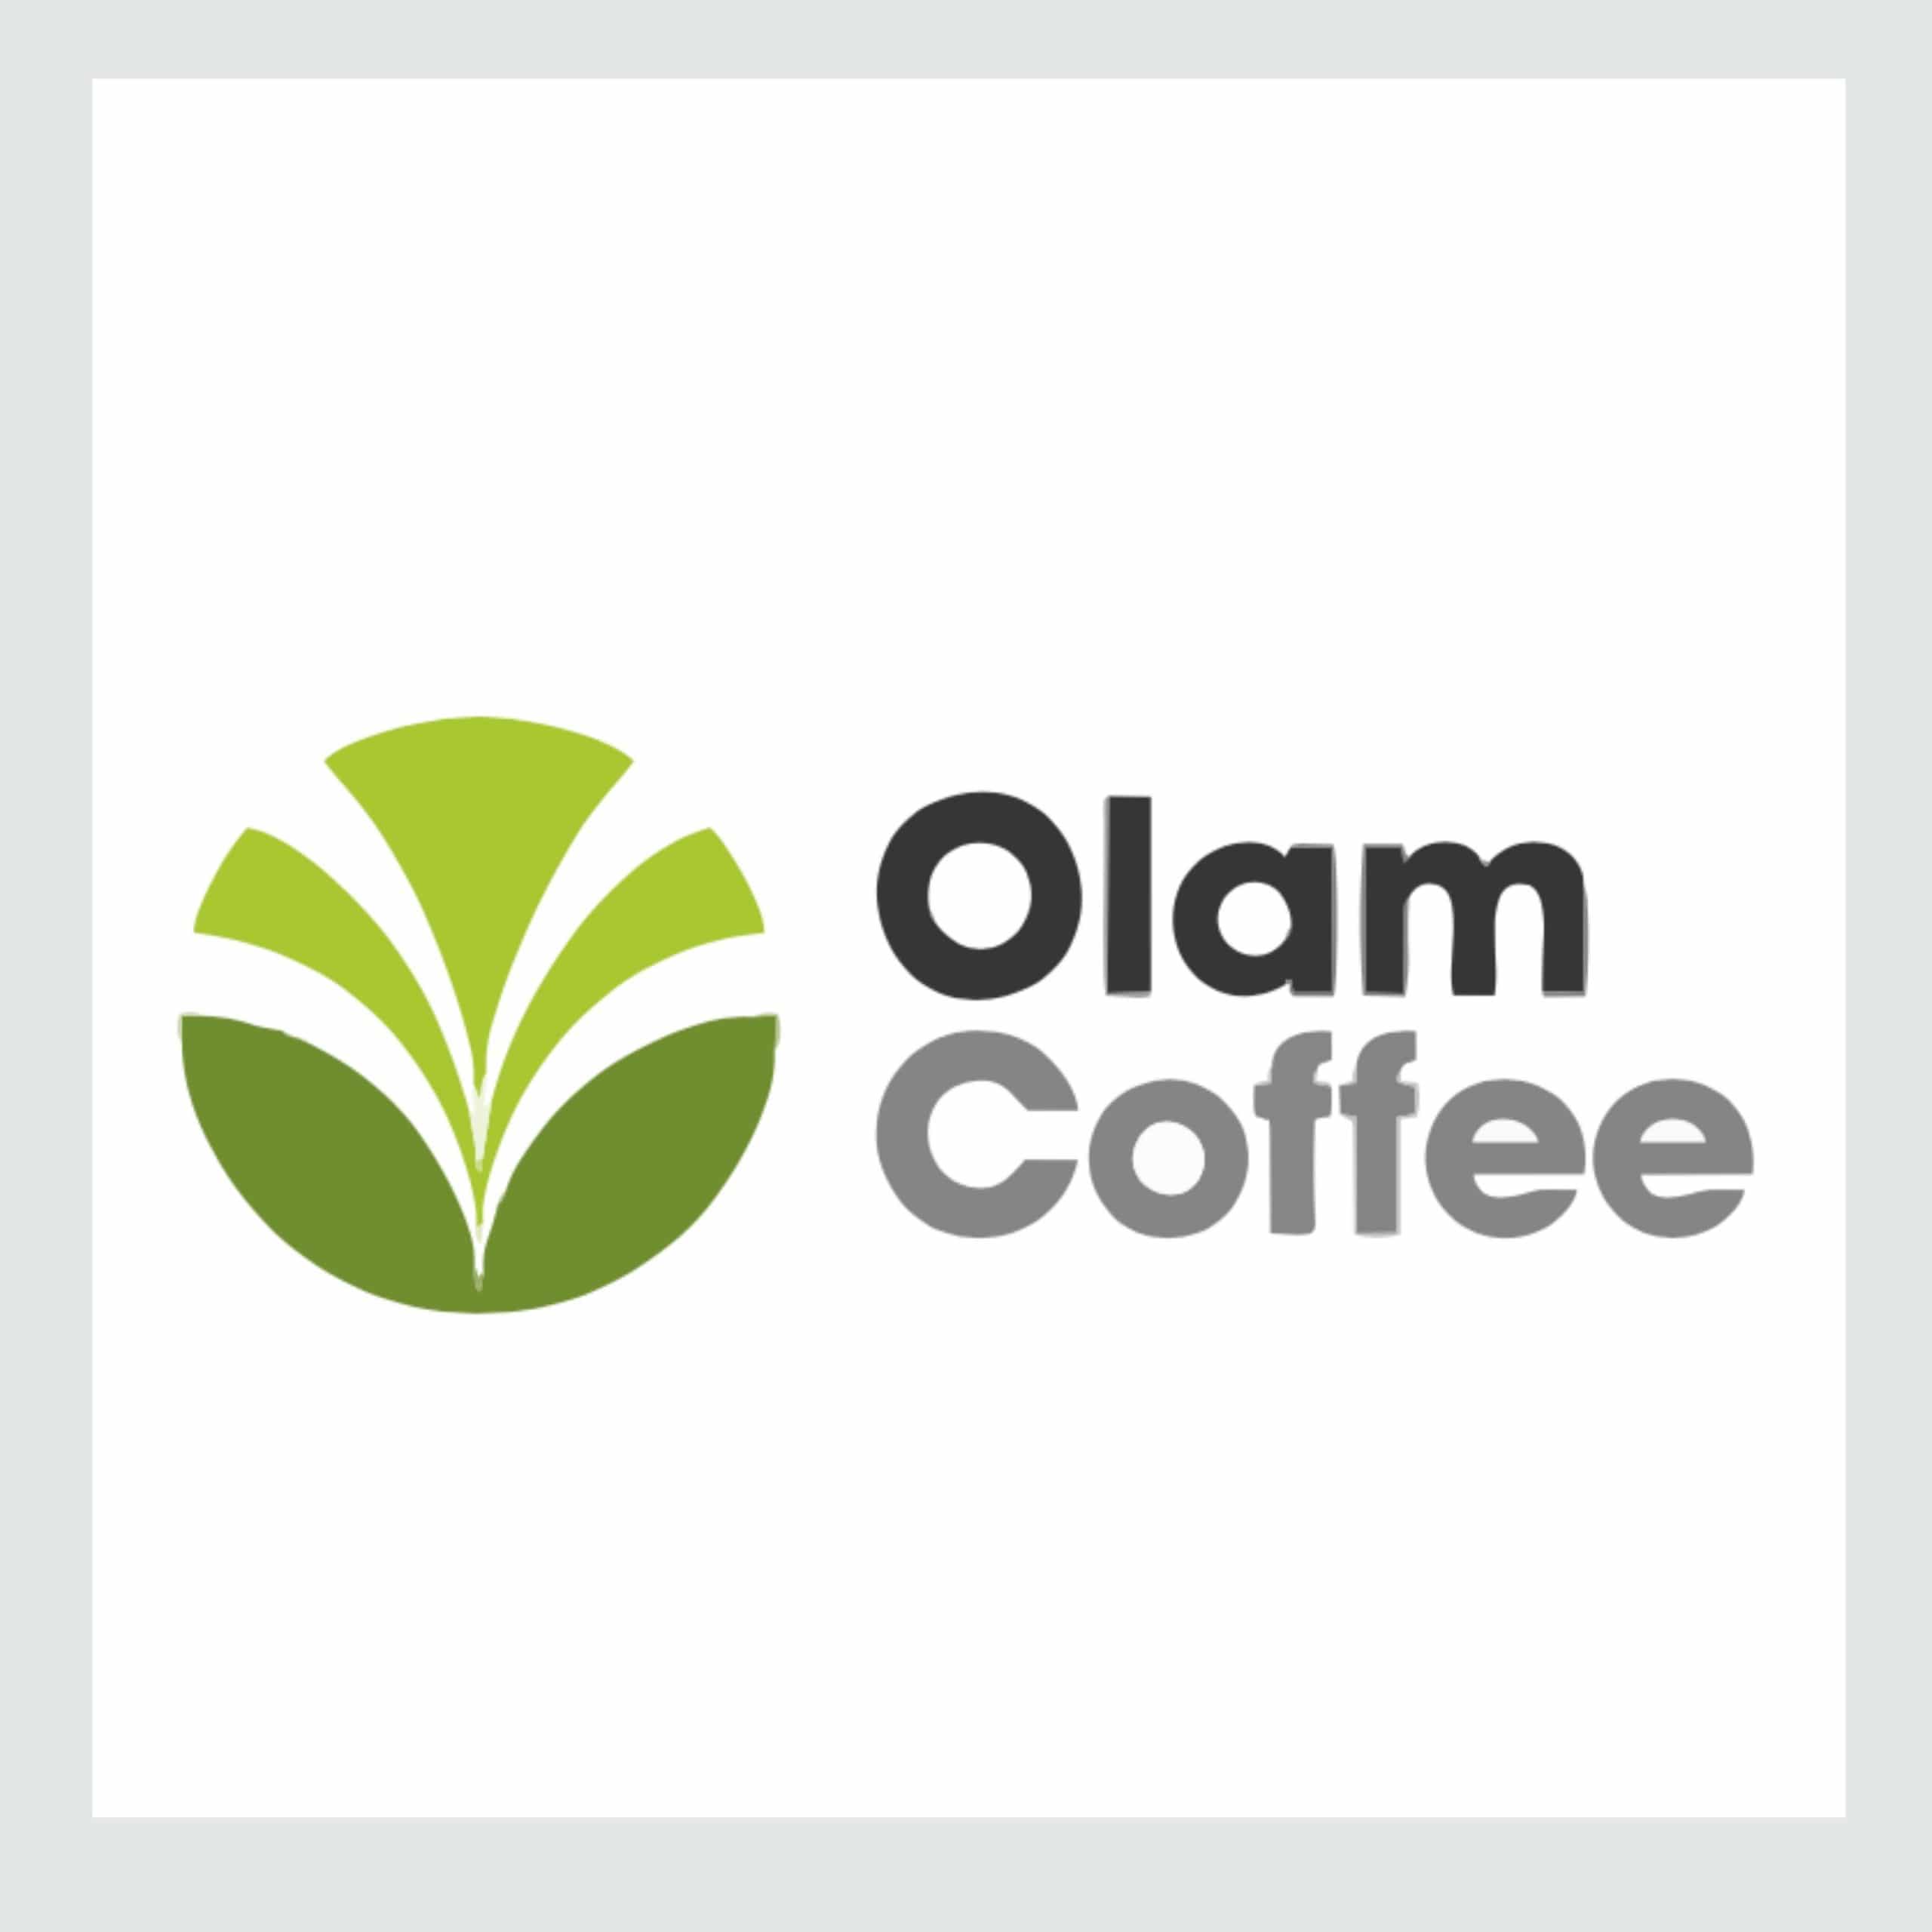 Olam Coffee